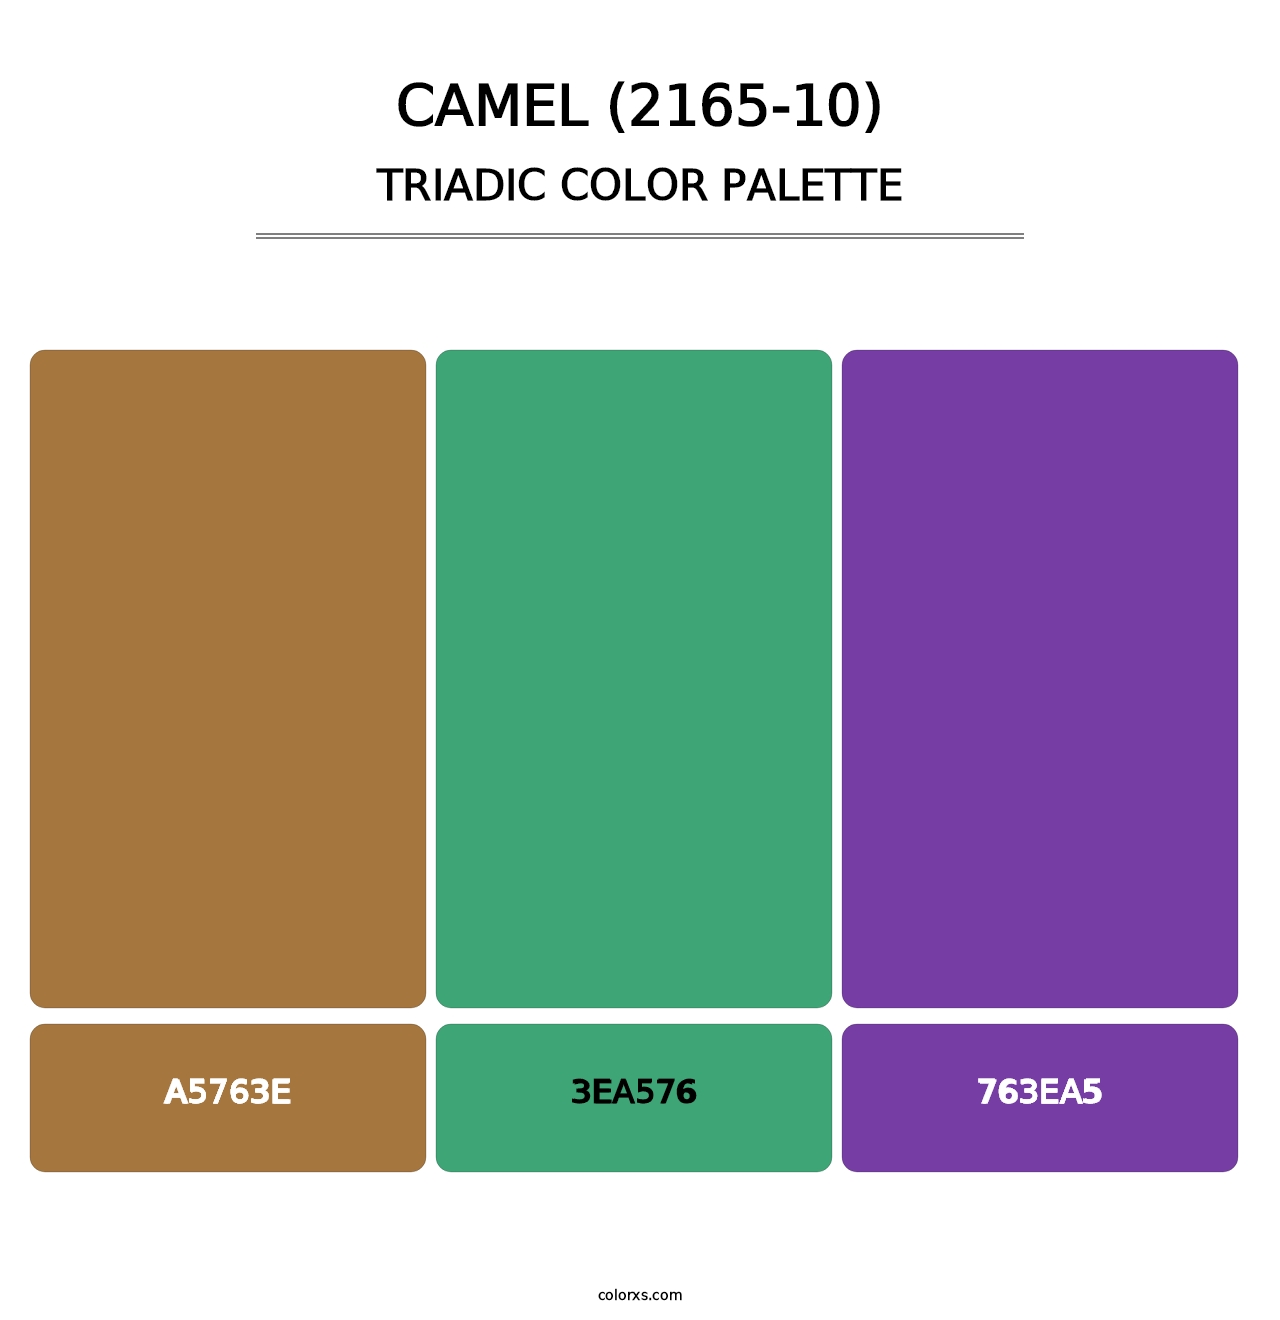 Camel (2165-10) - Triadic Color Palette